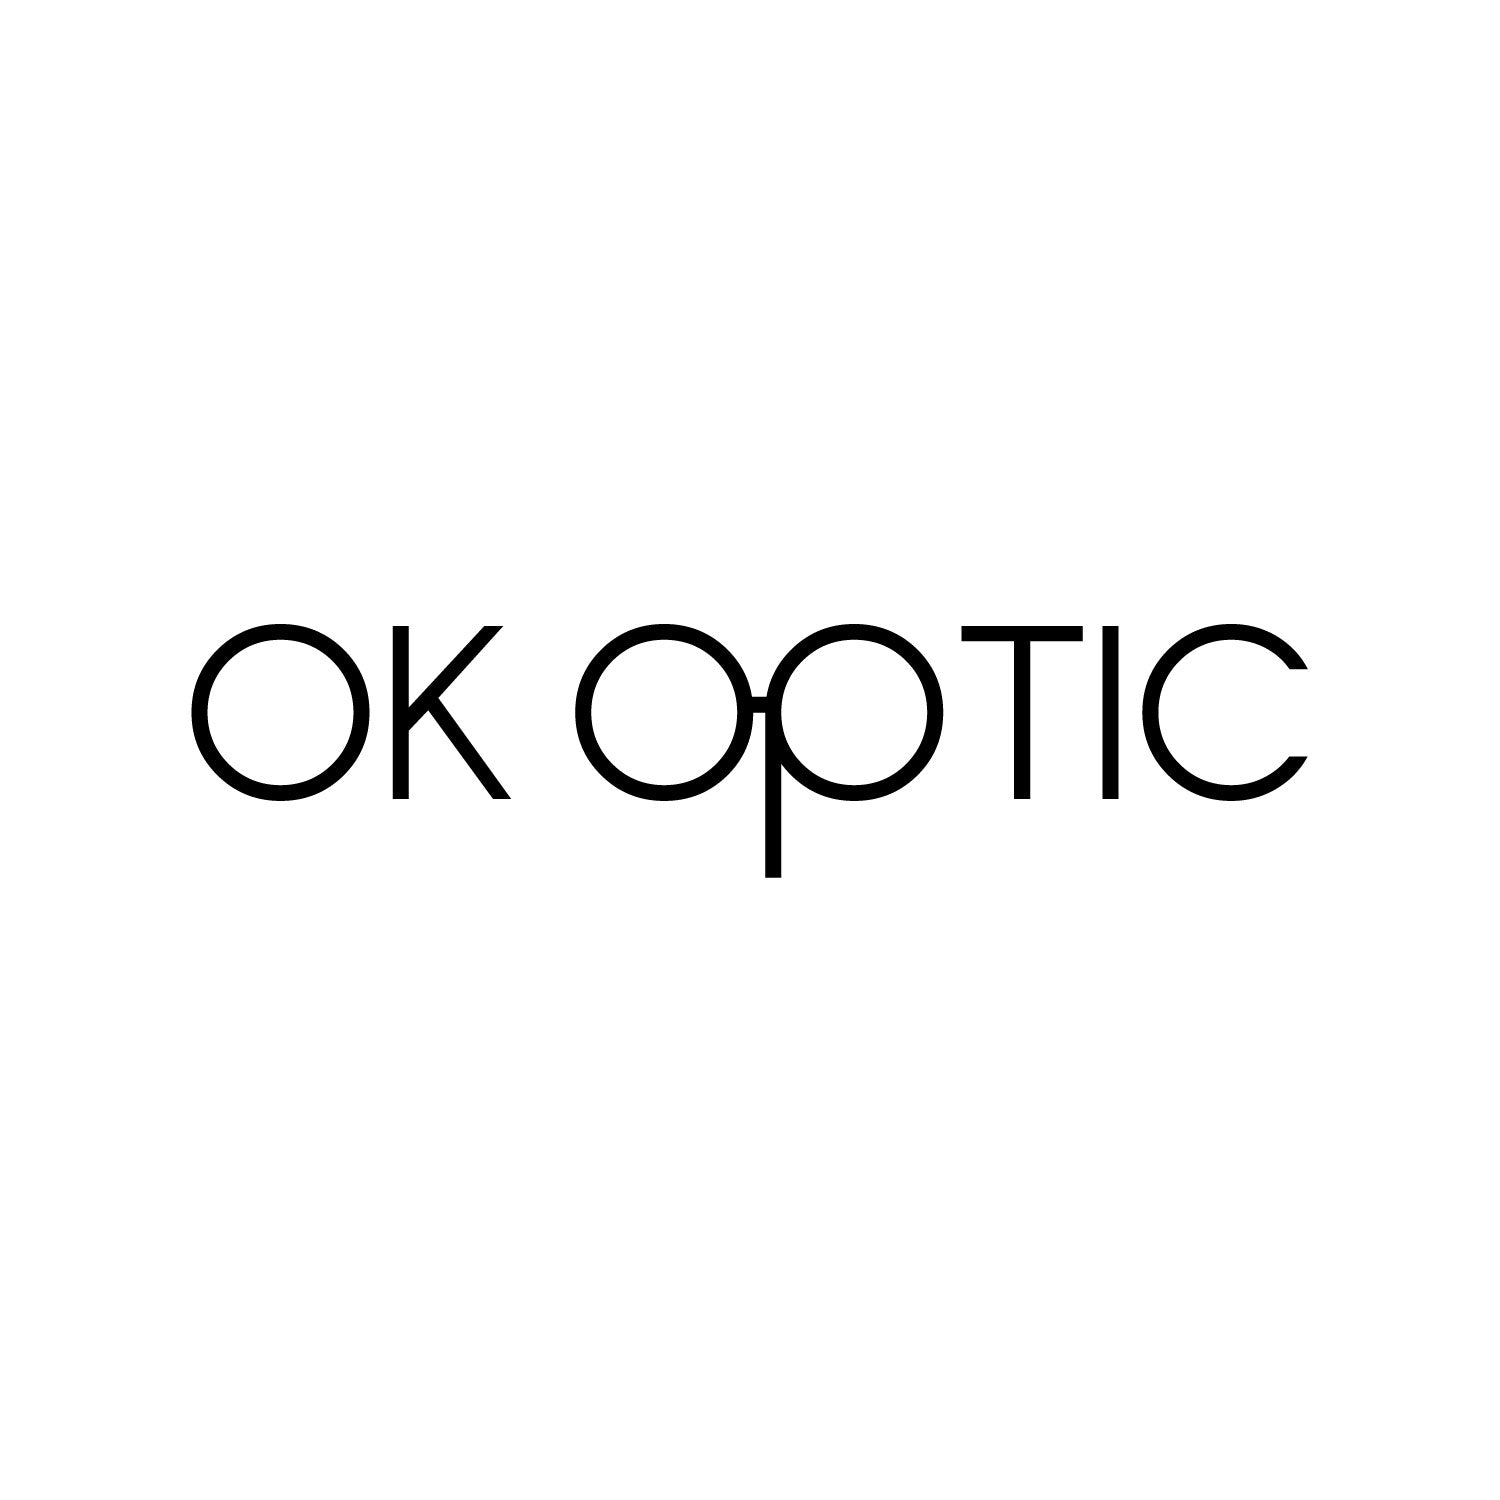 OK OPTIC – OKOPTIC